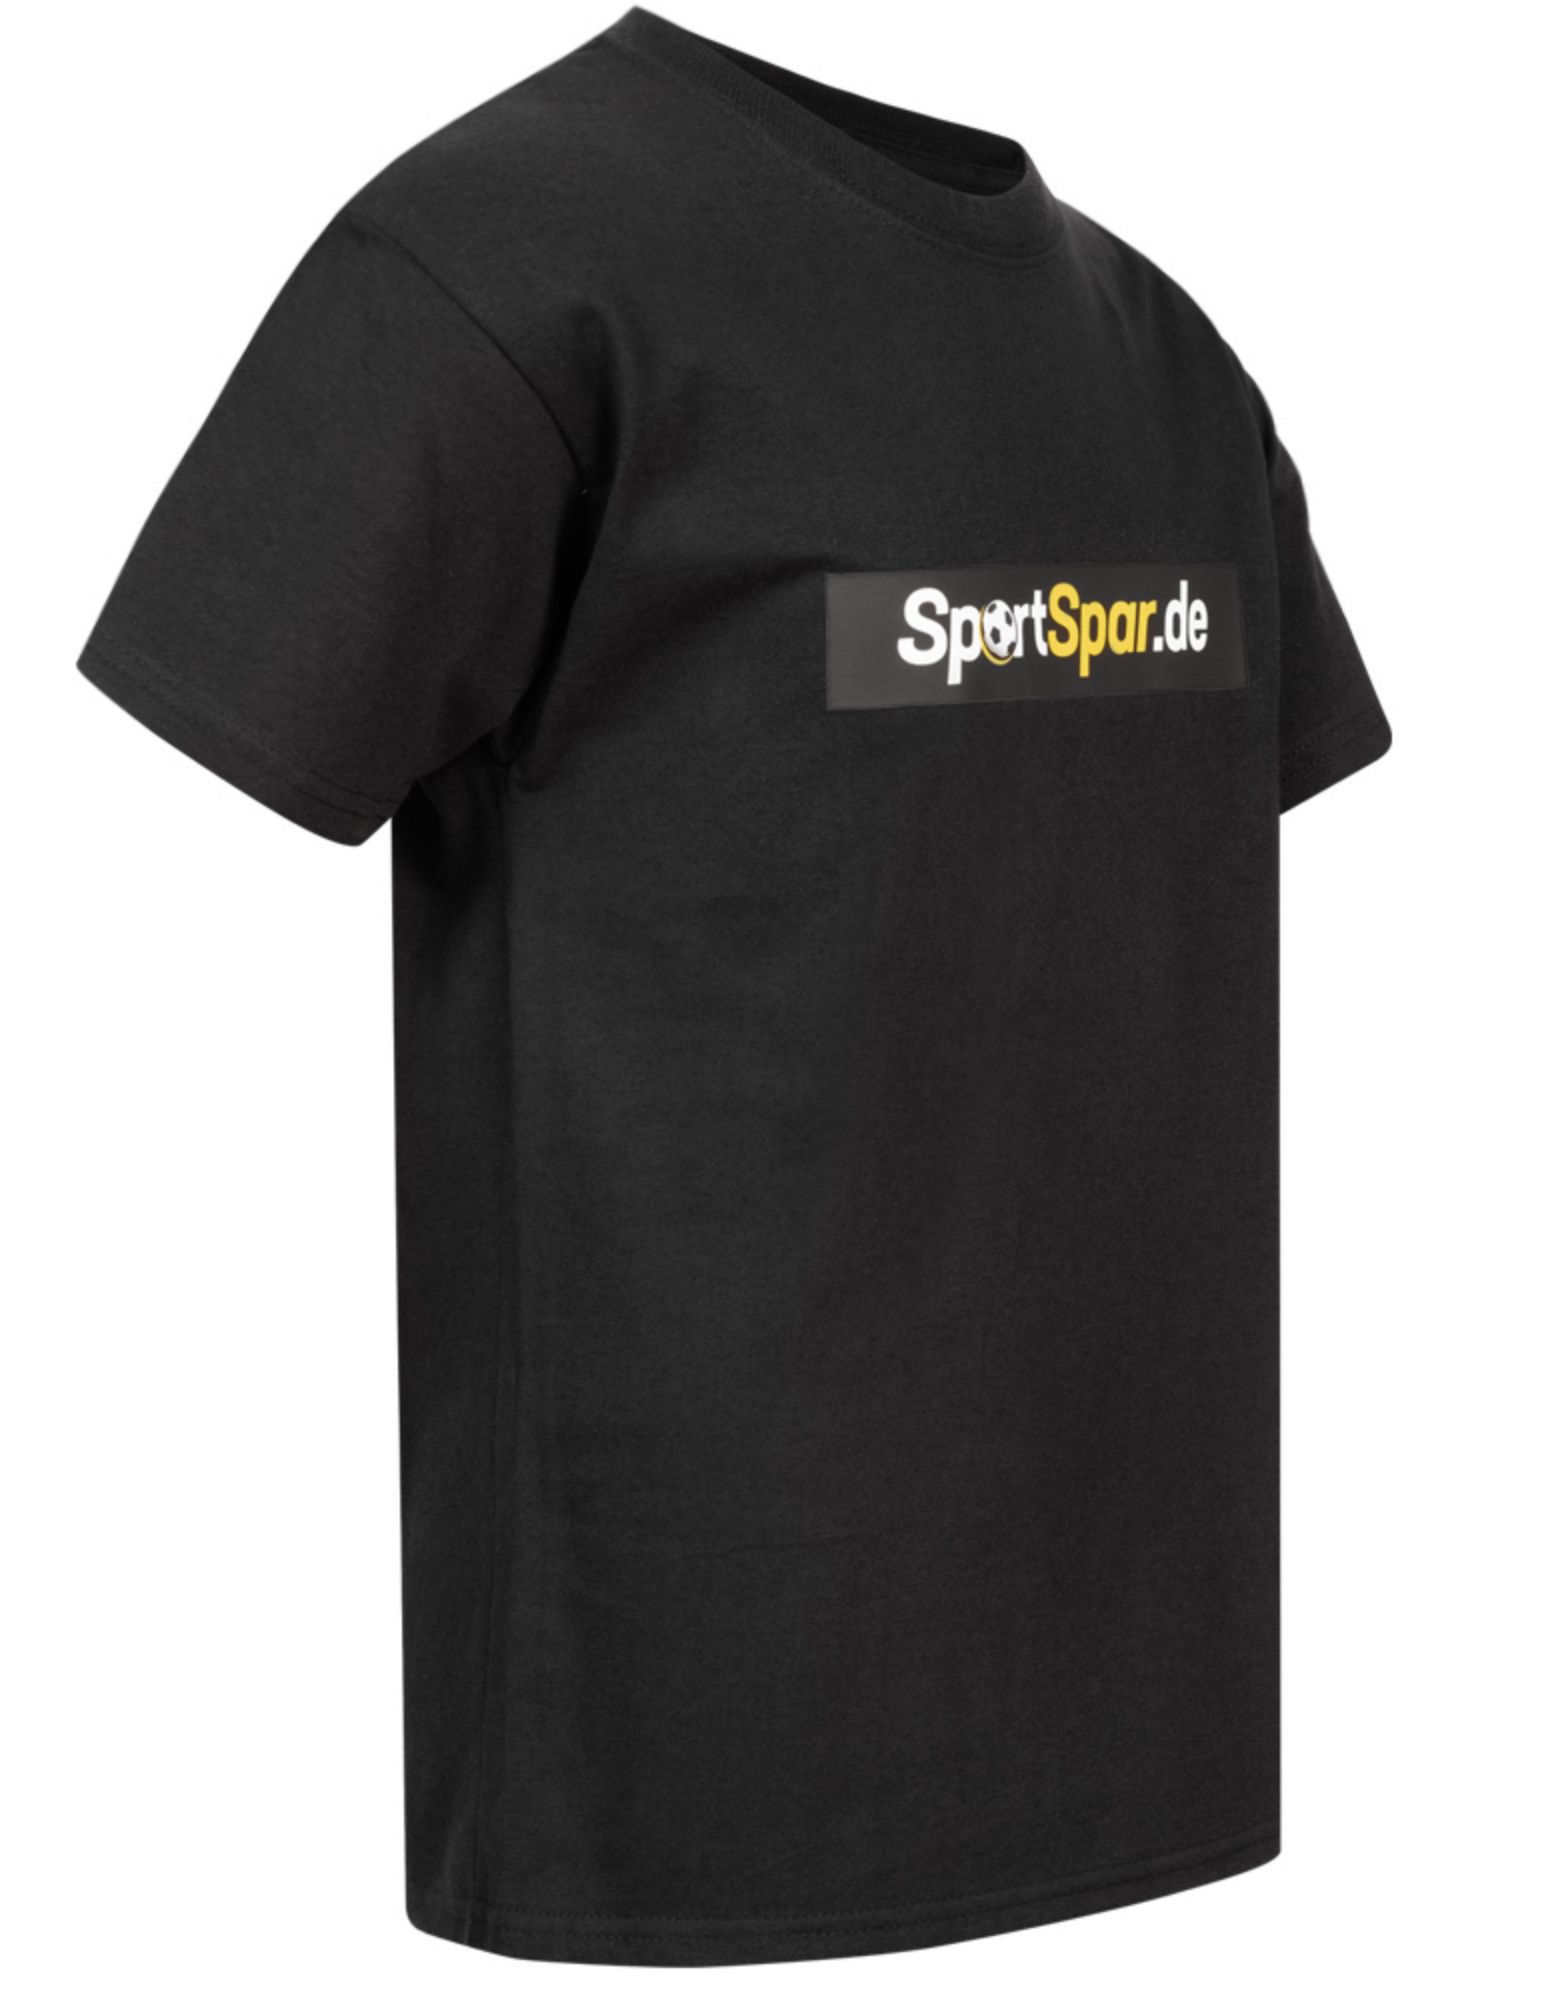 Hanes x Sportspar.de Baumwollinho Kinder T Shirt für je nur 0,22€ + VSK